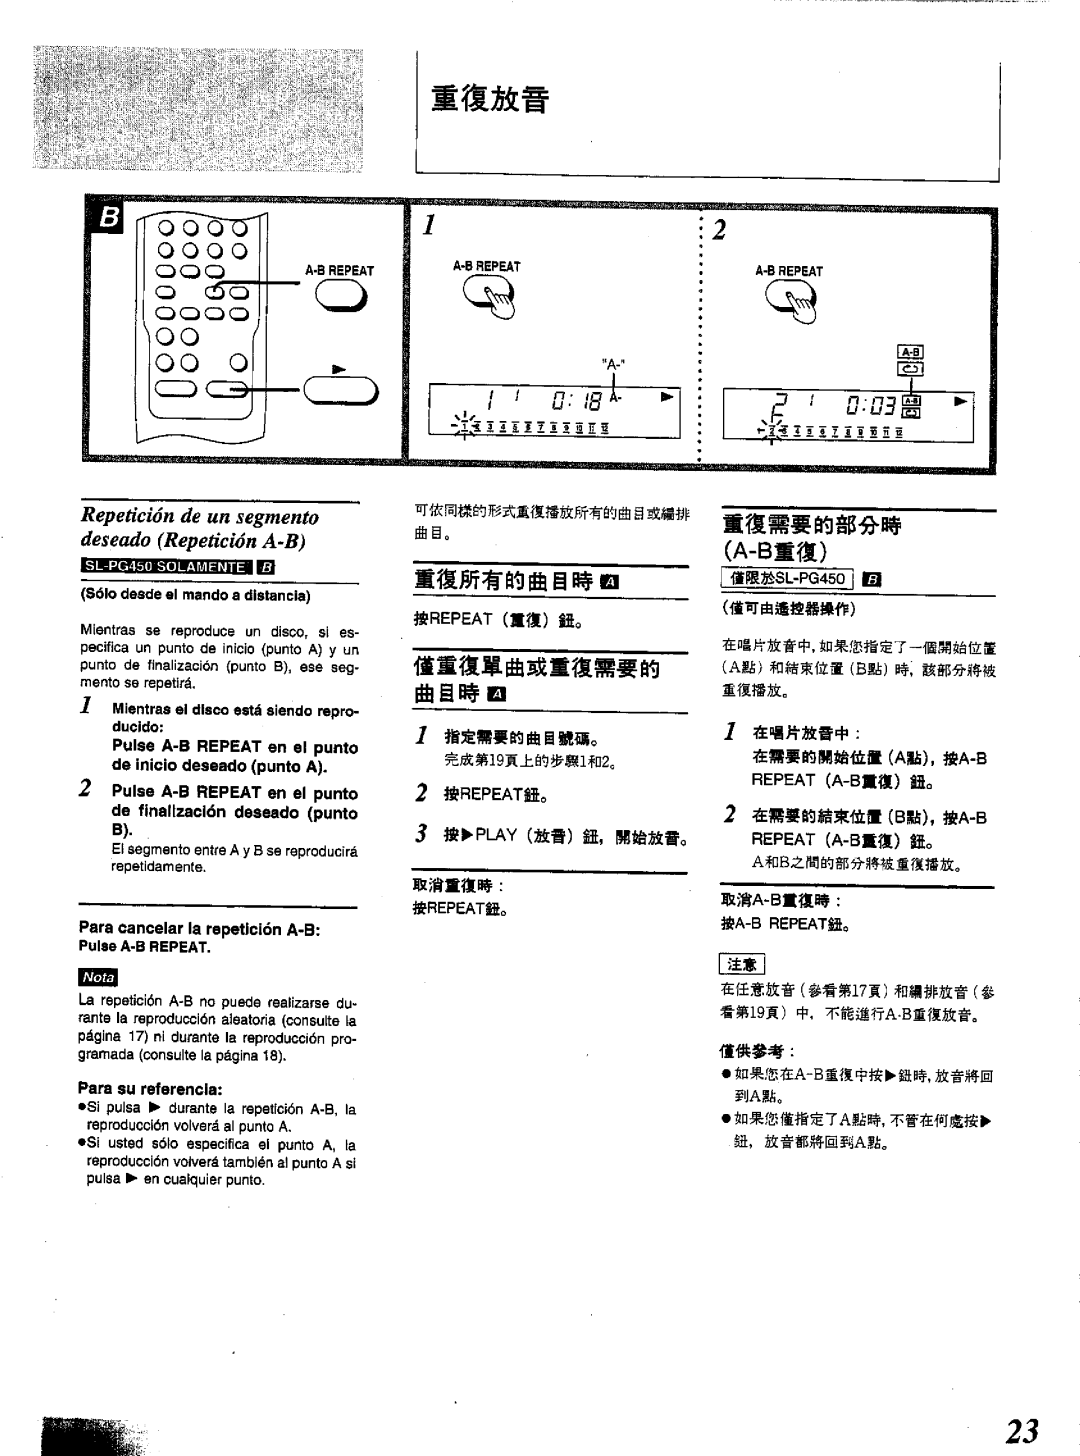 Technics SL-PG350, SL-PG450 manual 